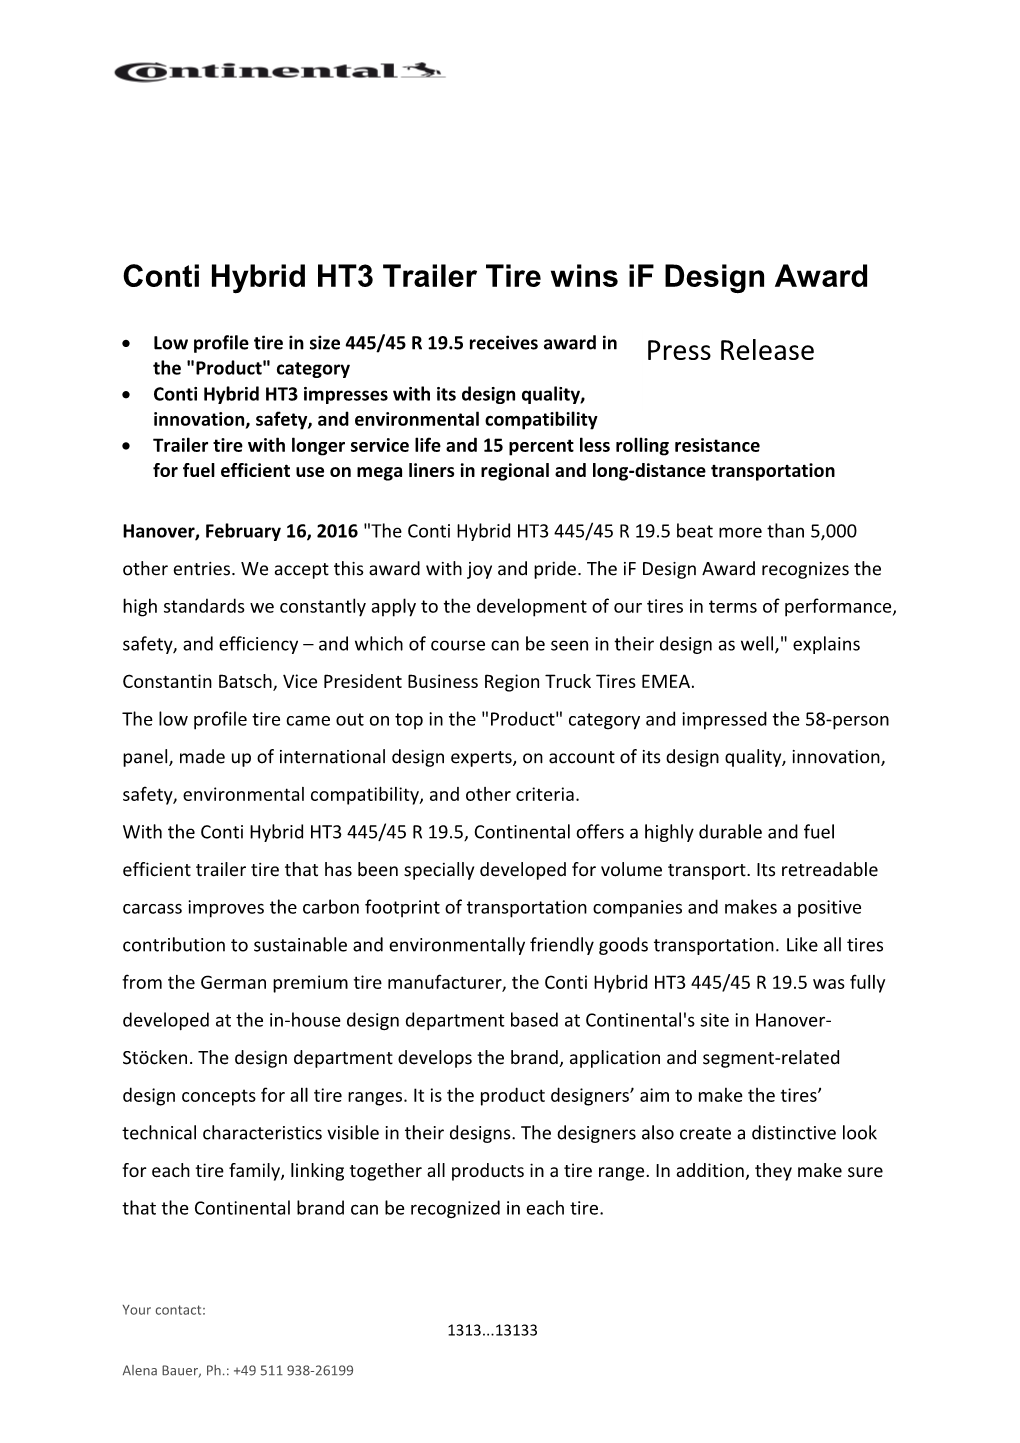 Conti Hybrid HT3 Trailer Tire Wins If Design Award